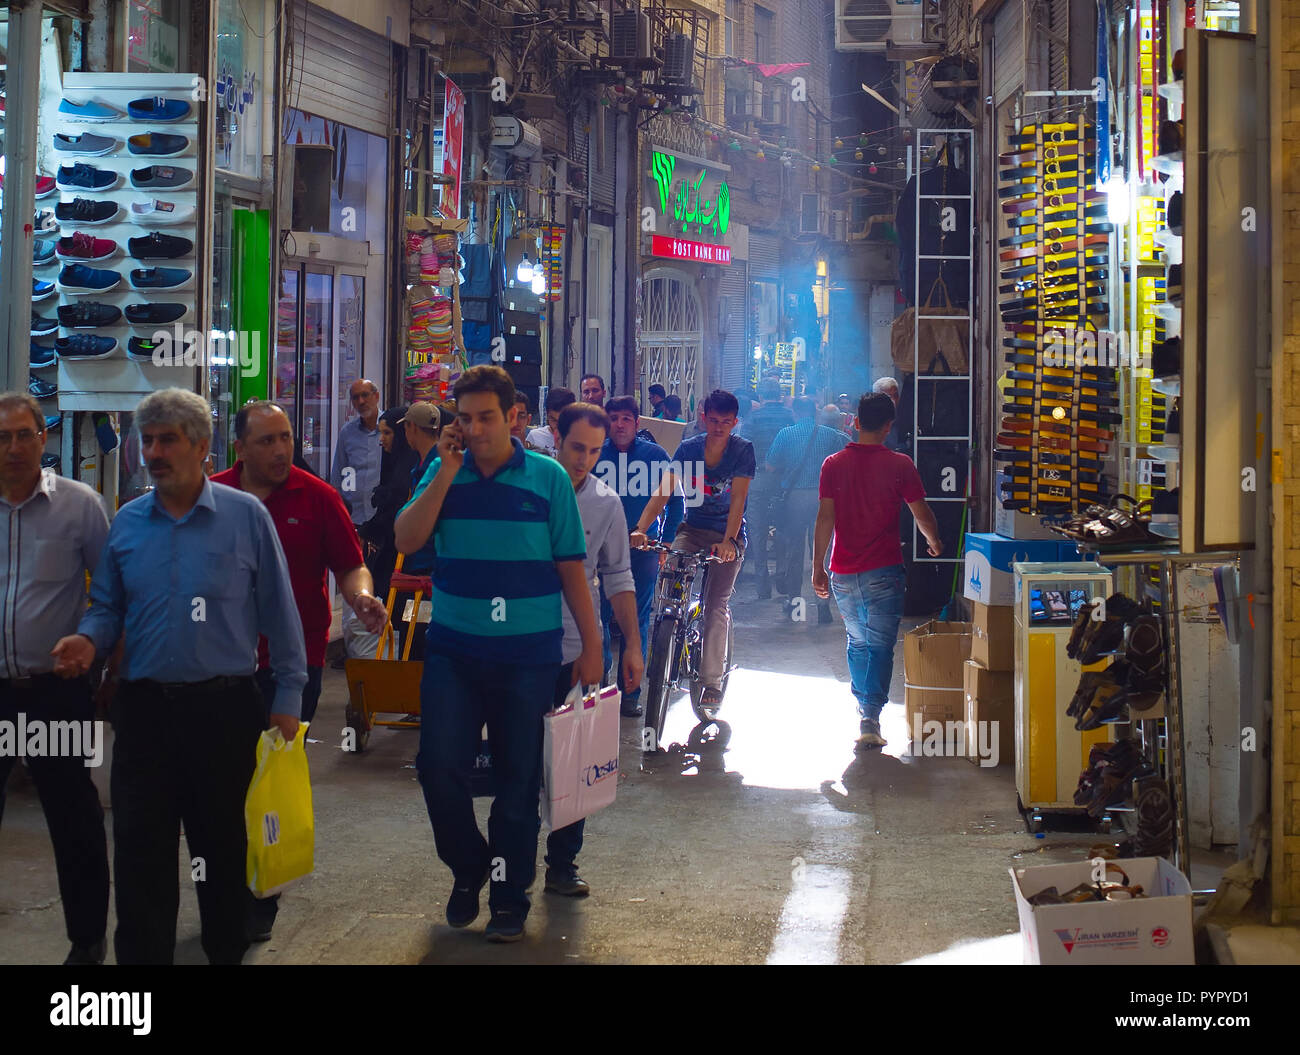 TEHRAN, IRAN - MAY 22, 2107: People at Tehran Grand Bazaar. The Grand Bazaar is an old historical market in Tehran. Stock Photo